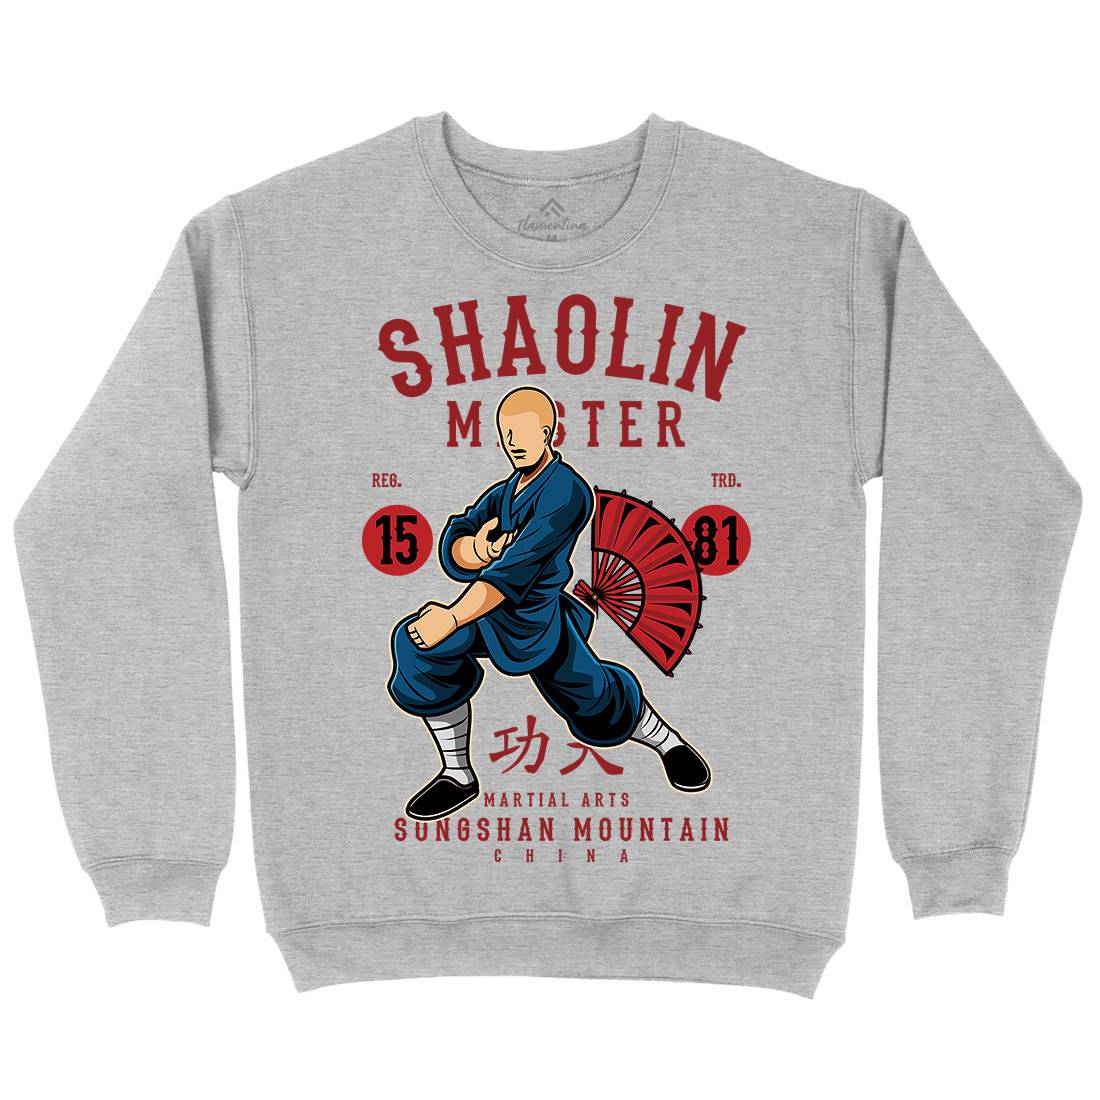 Shaolin Master Kids Crew Neck Sweatshirt Asian C438